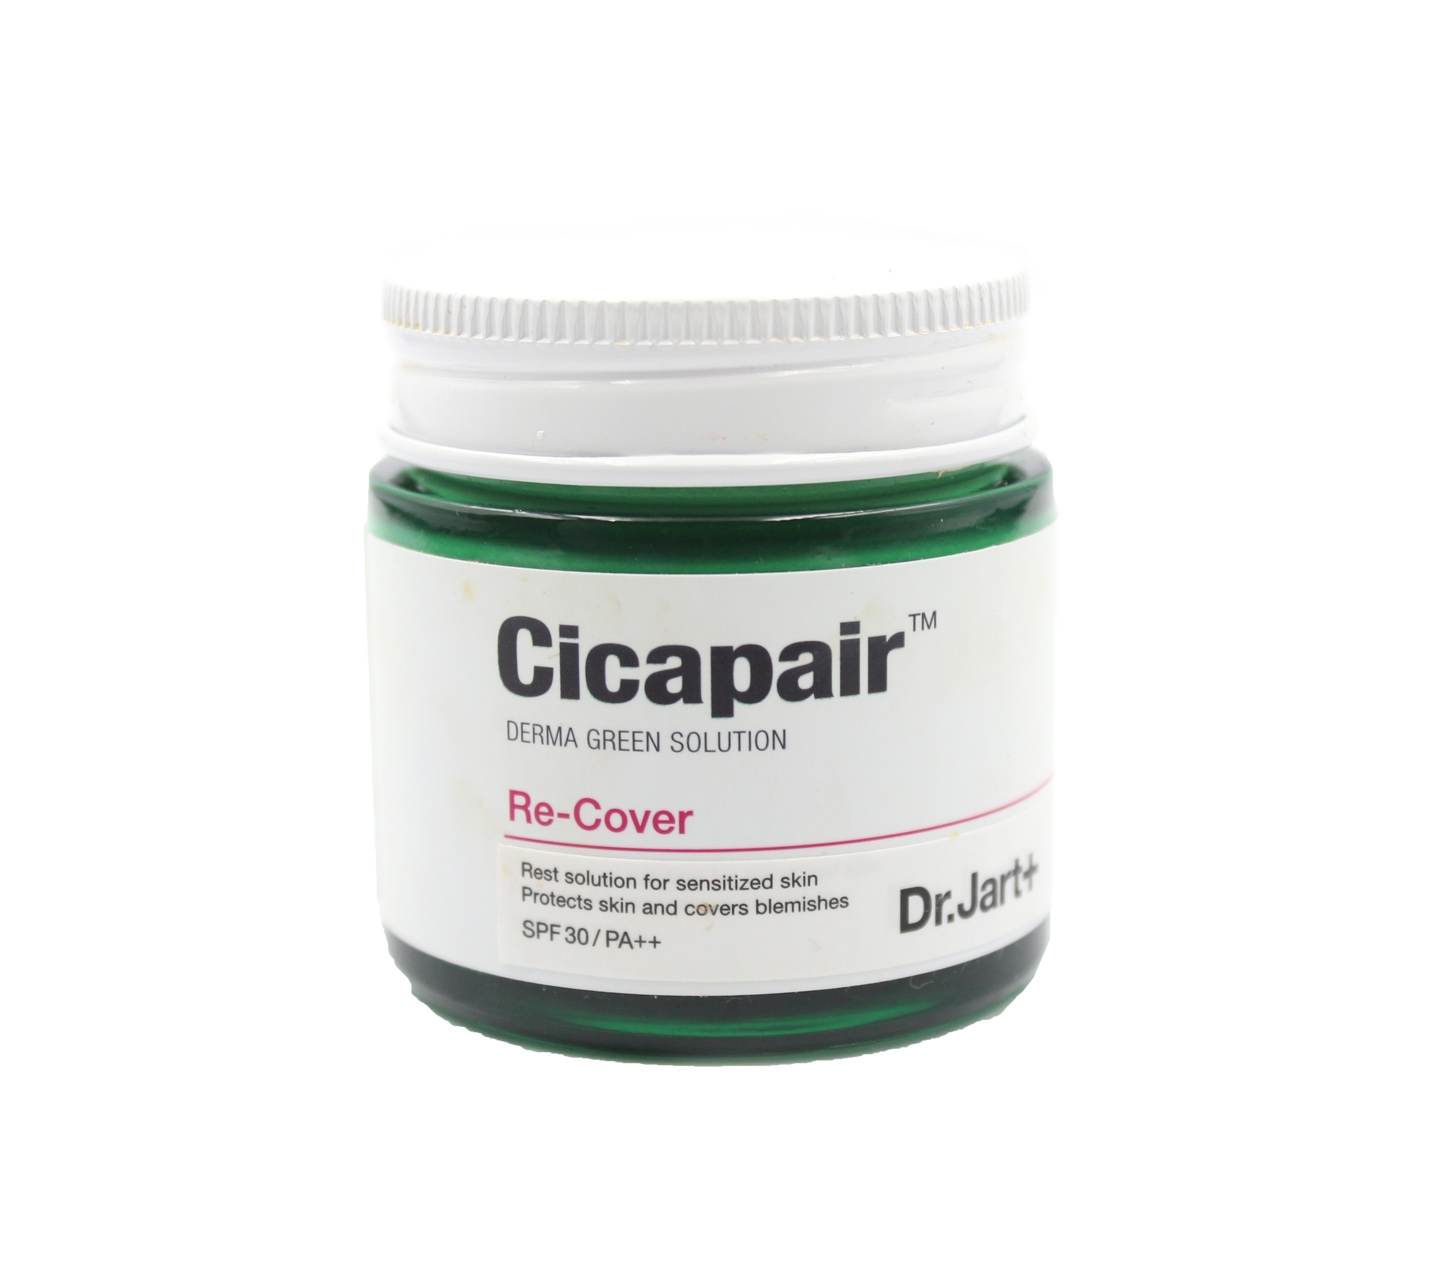 Dr Jart Cicapair Derma Green Solution Re-Cover Faces